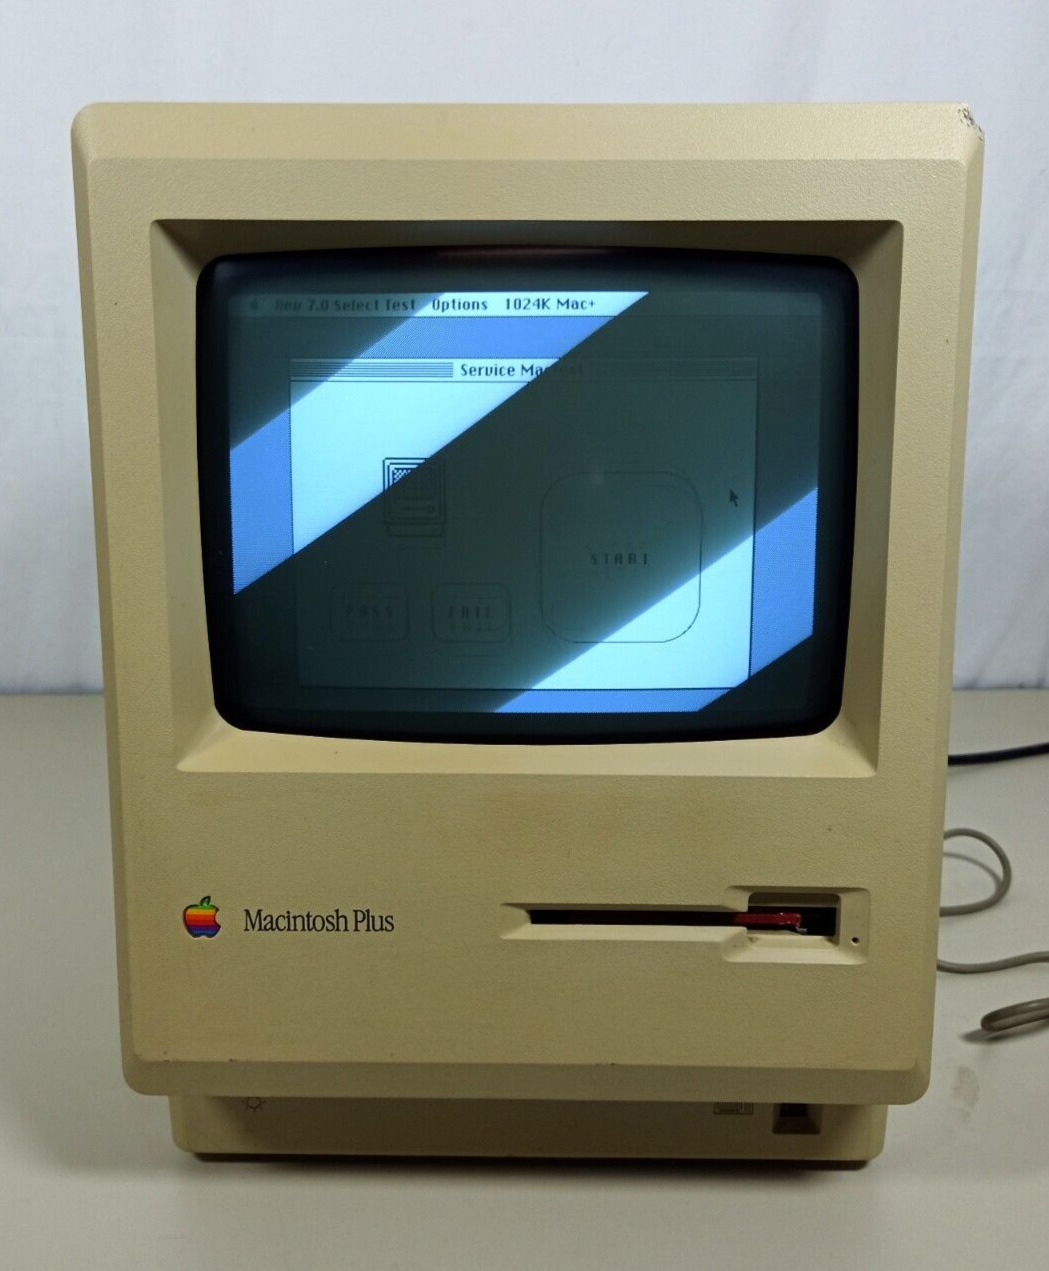 Vintage Apple Macintosh Plus 1MB M0001A Desktop Computer - Powers On